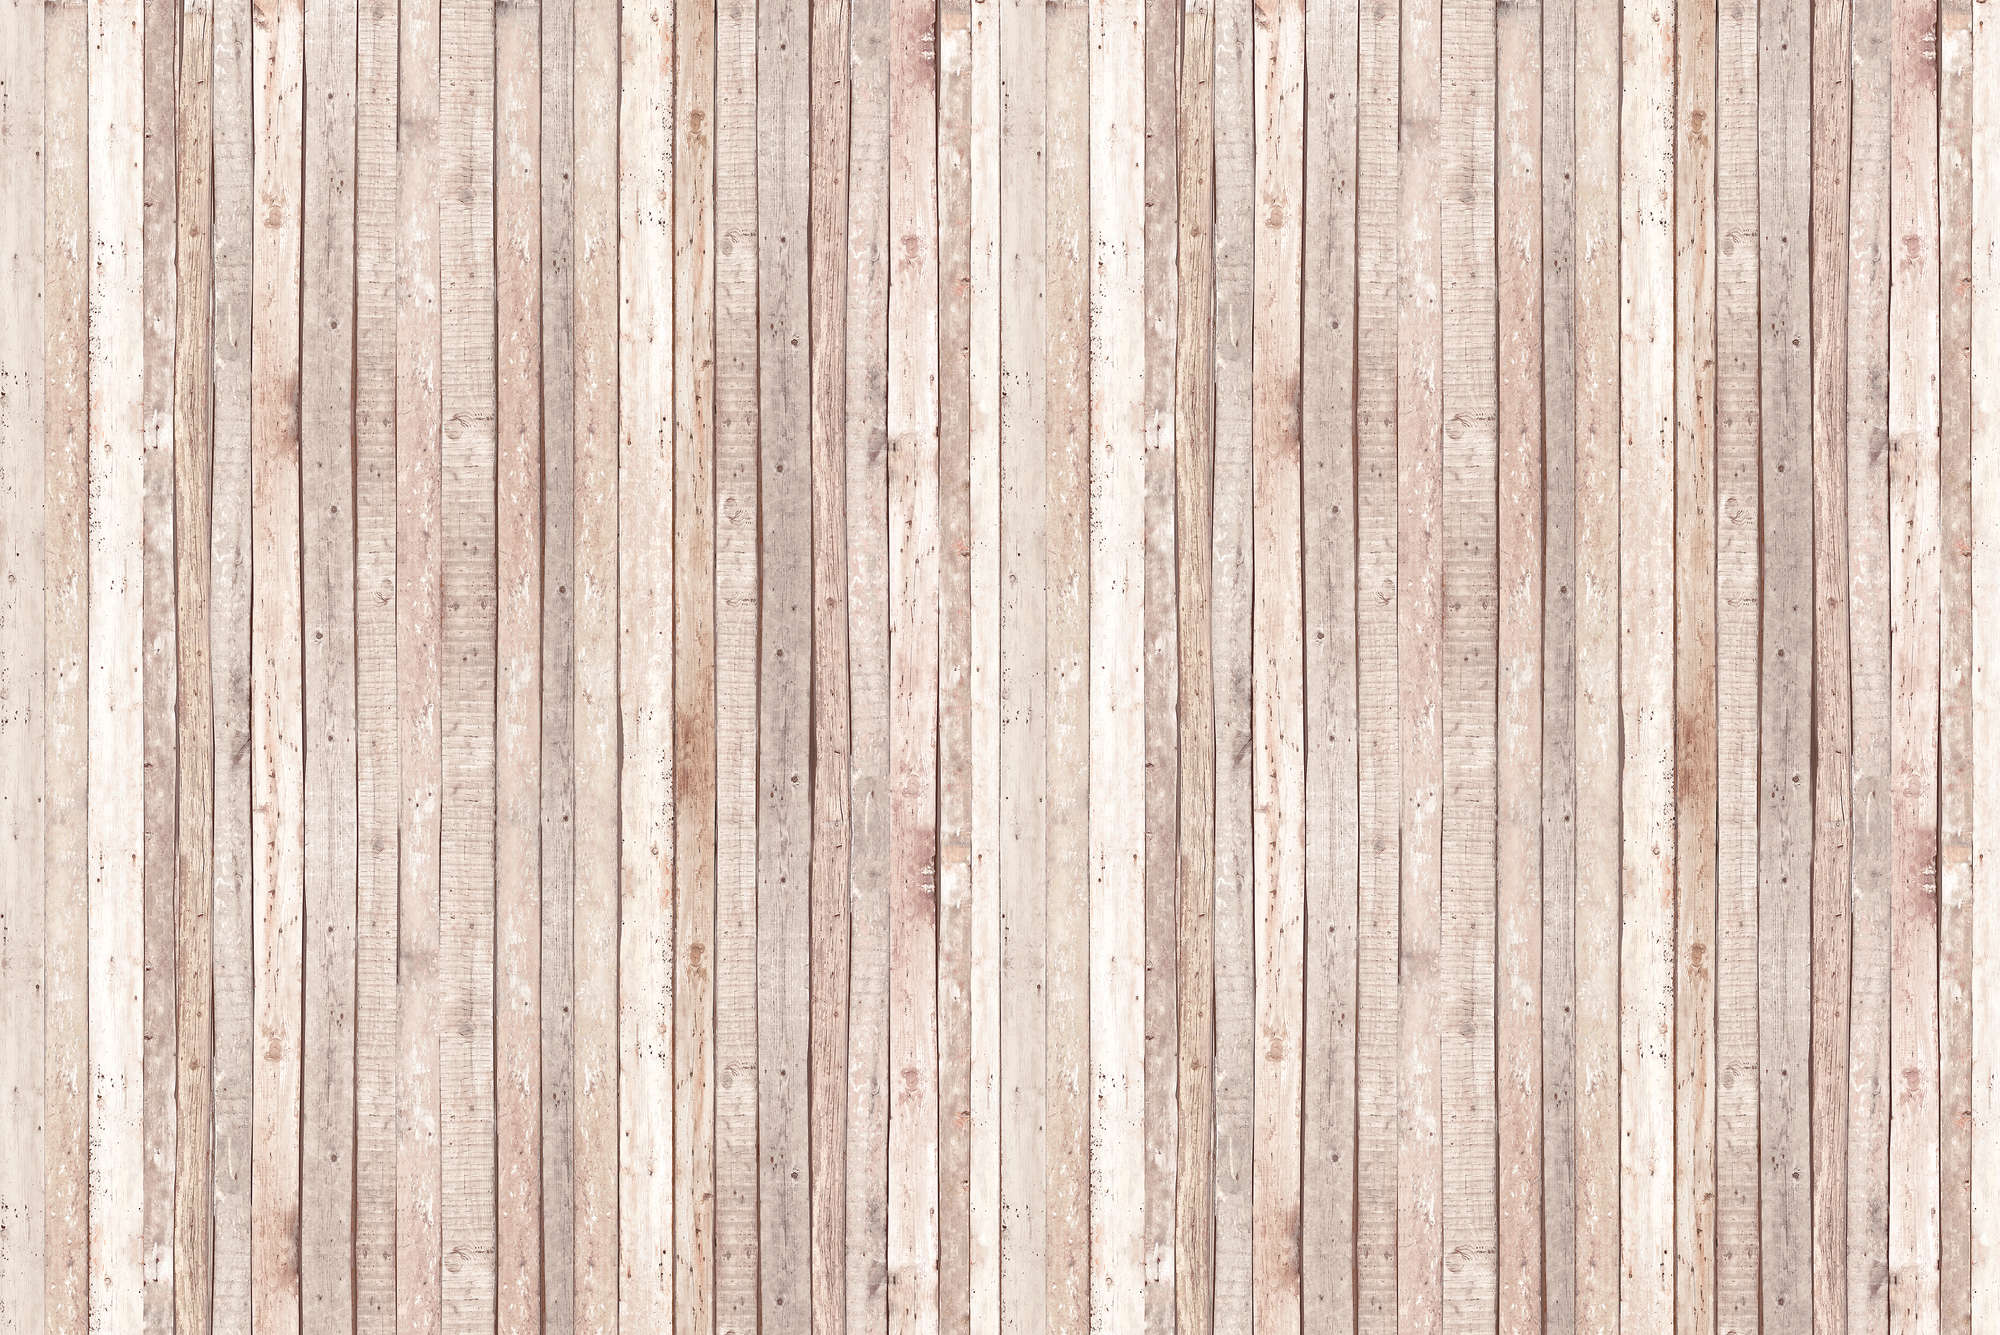             Fototapete Wand aus Holzbrettern – Strukturiertes Vlies
        